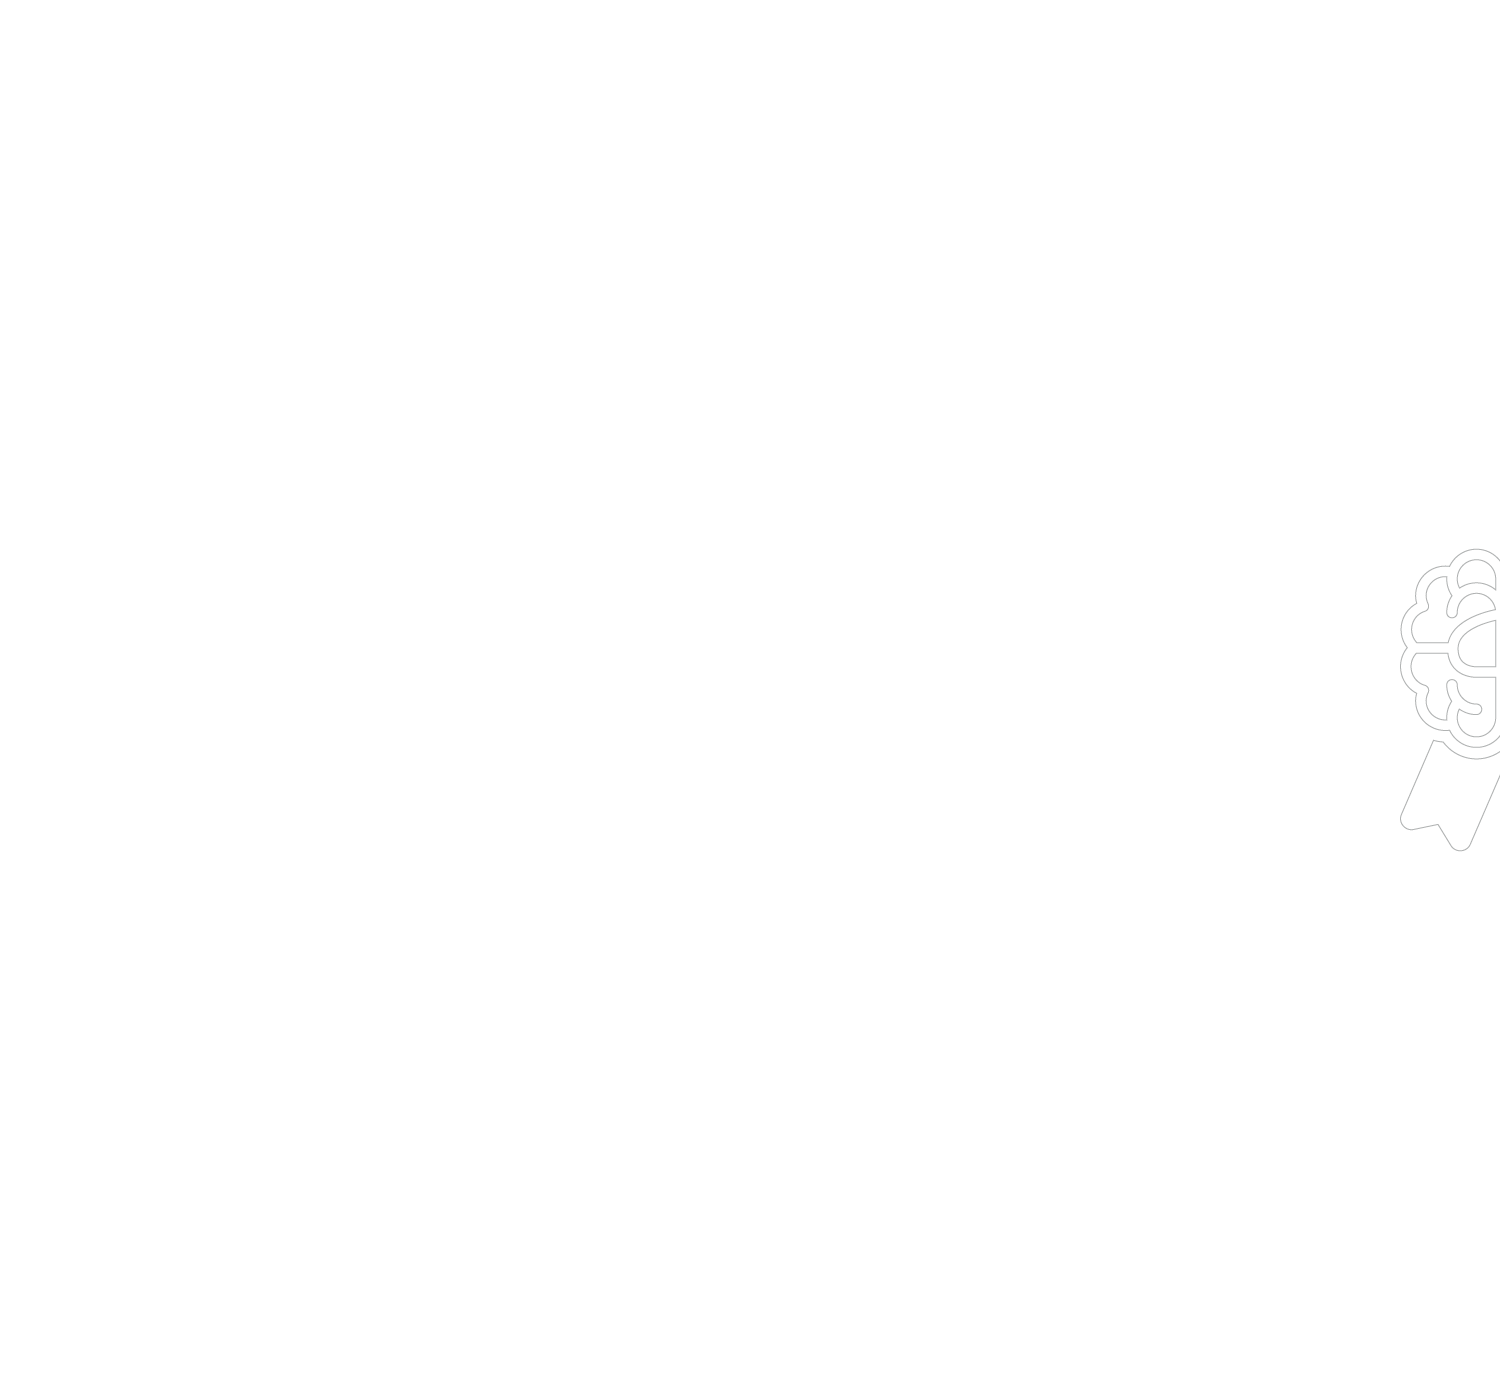 Logogestaltung Loni Herrenausstatter